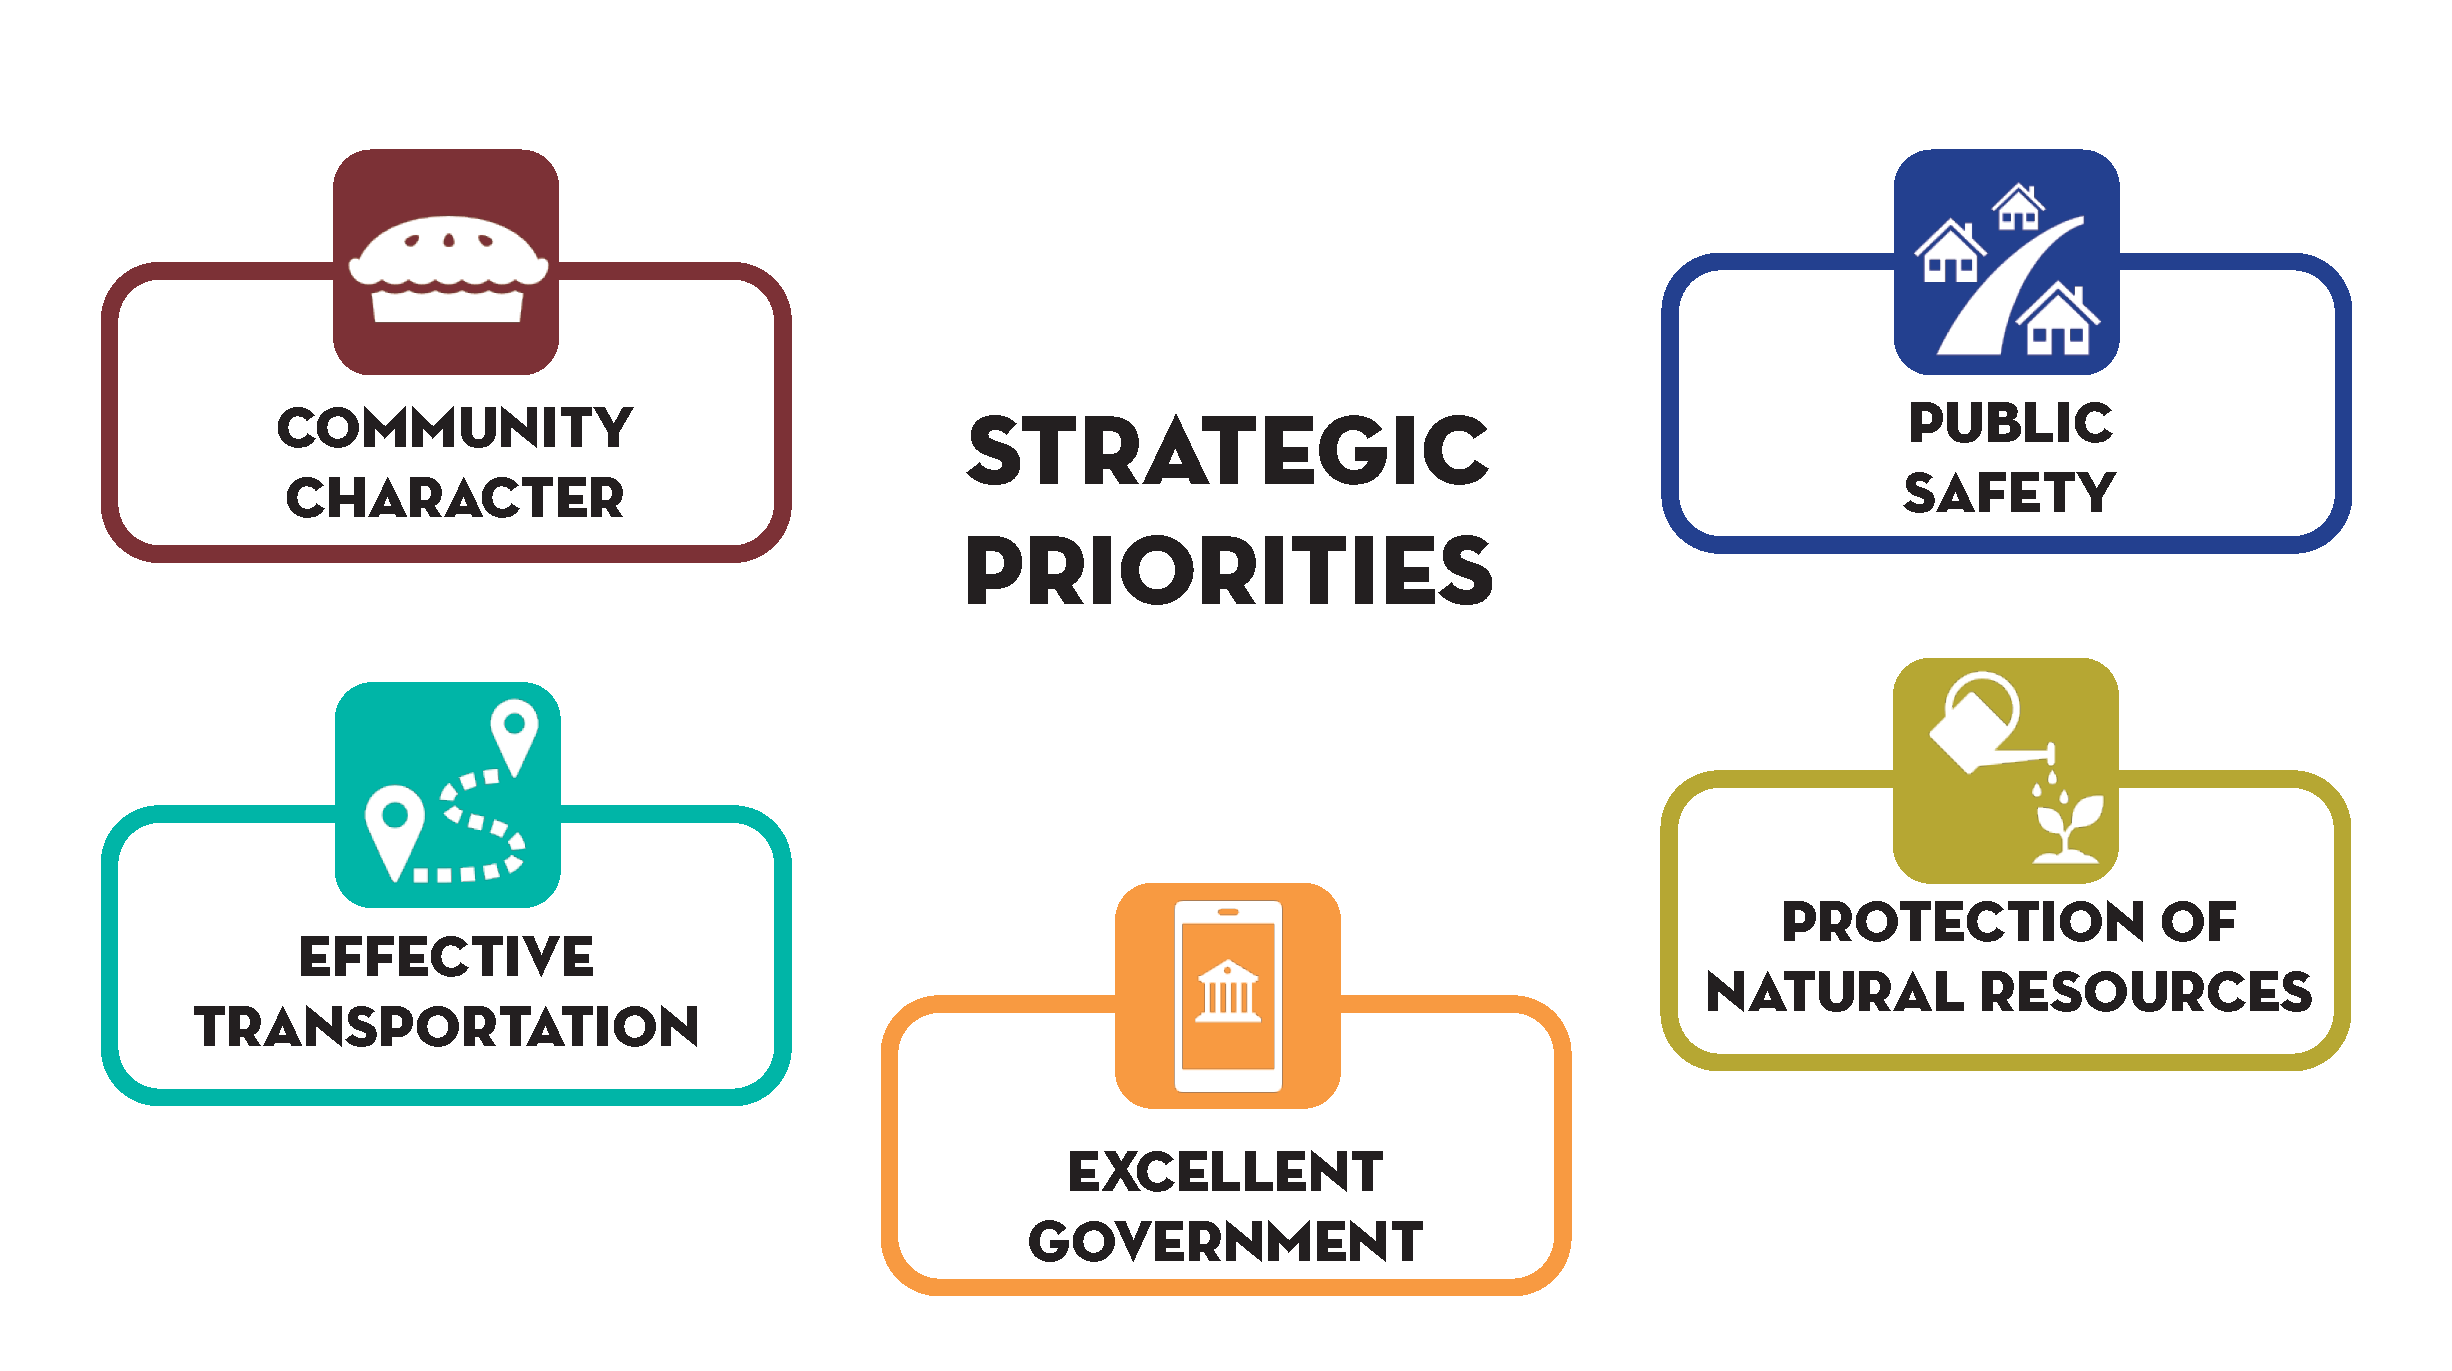 Graphic showing city's strategic priorities.